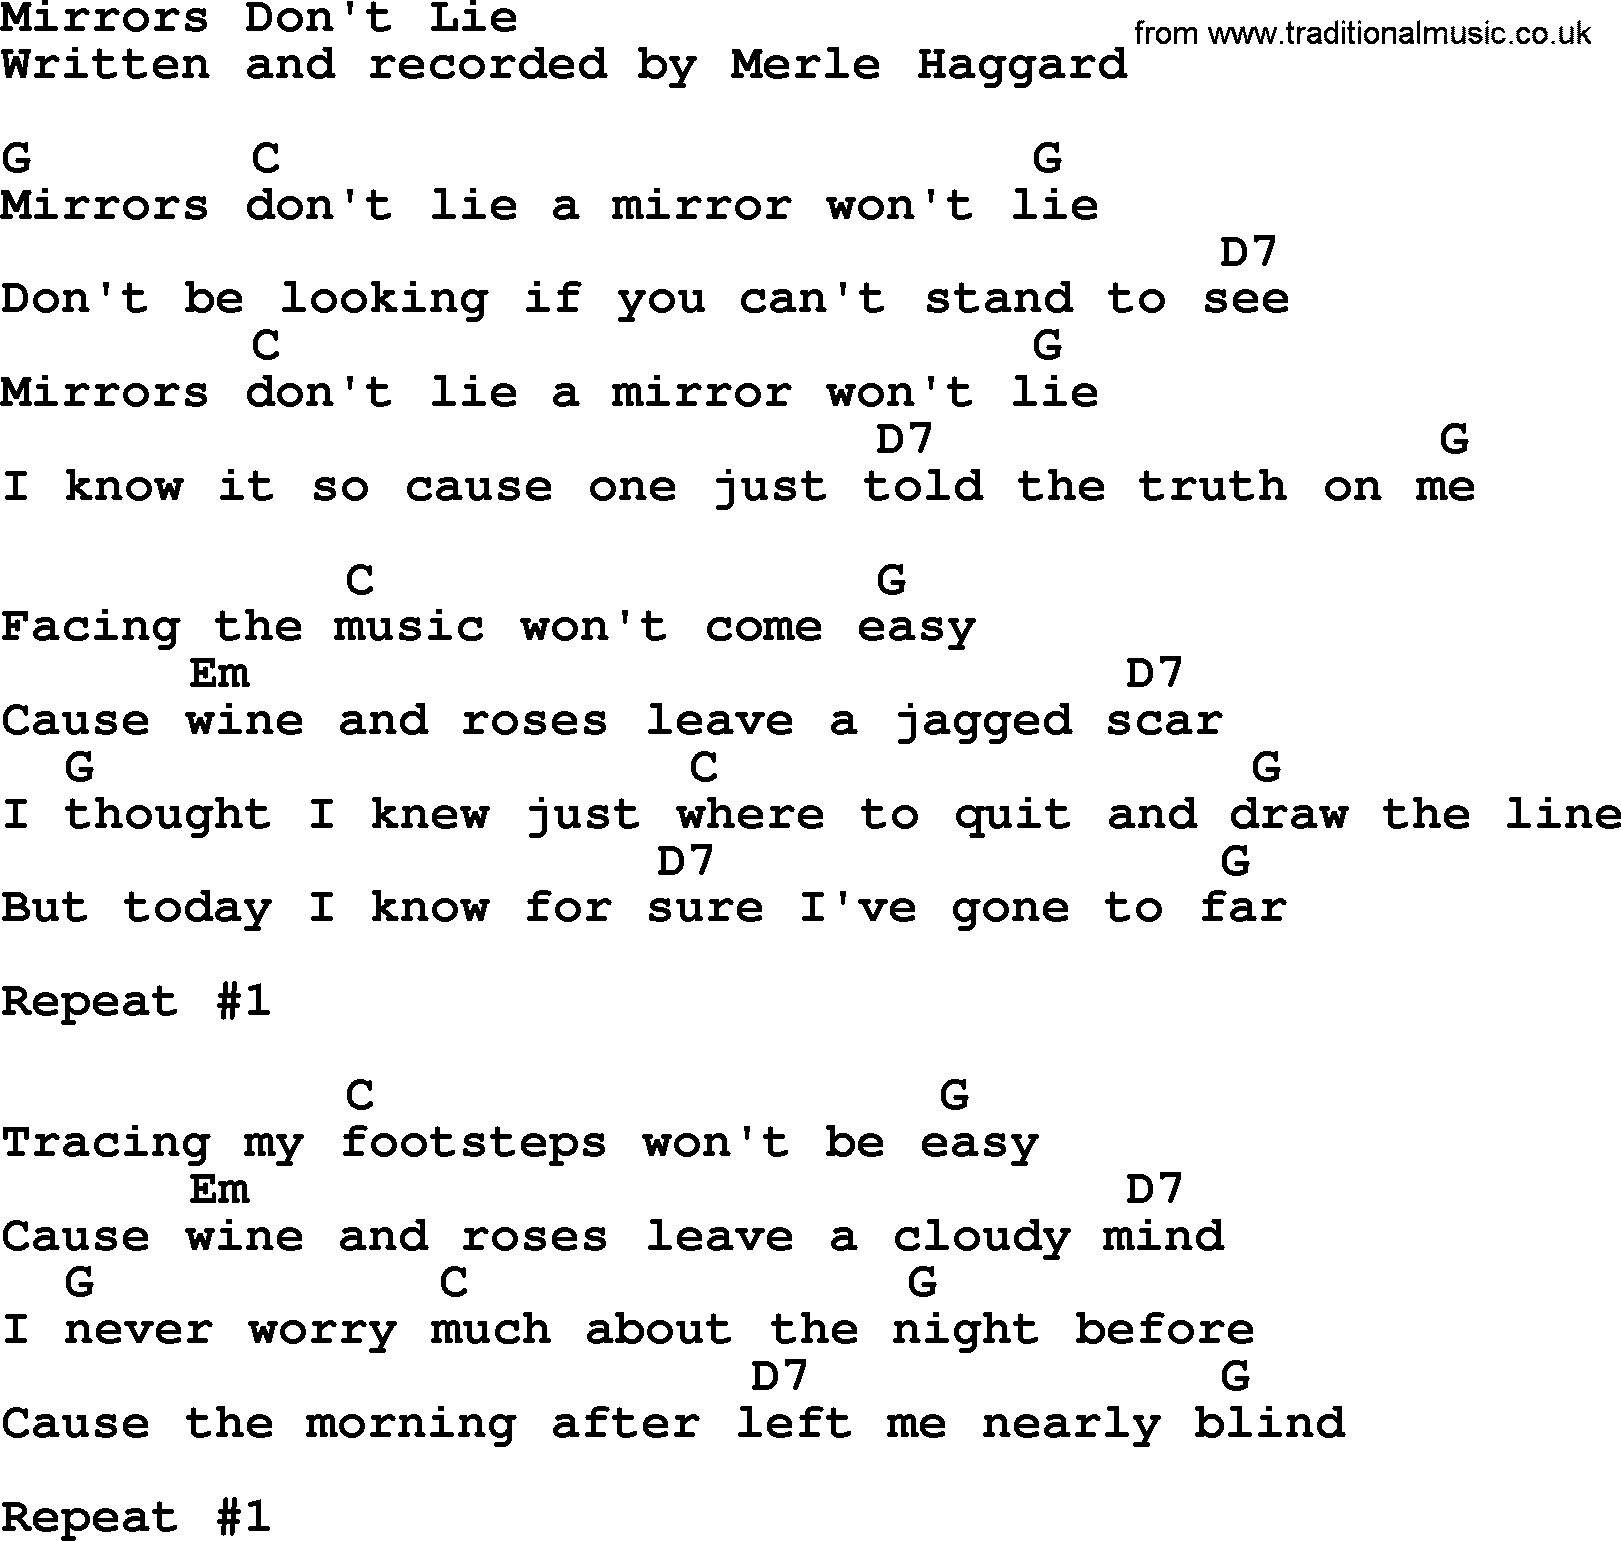 Merle Haggard song: Mirrors Don't Lie, lyrics and chords